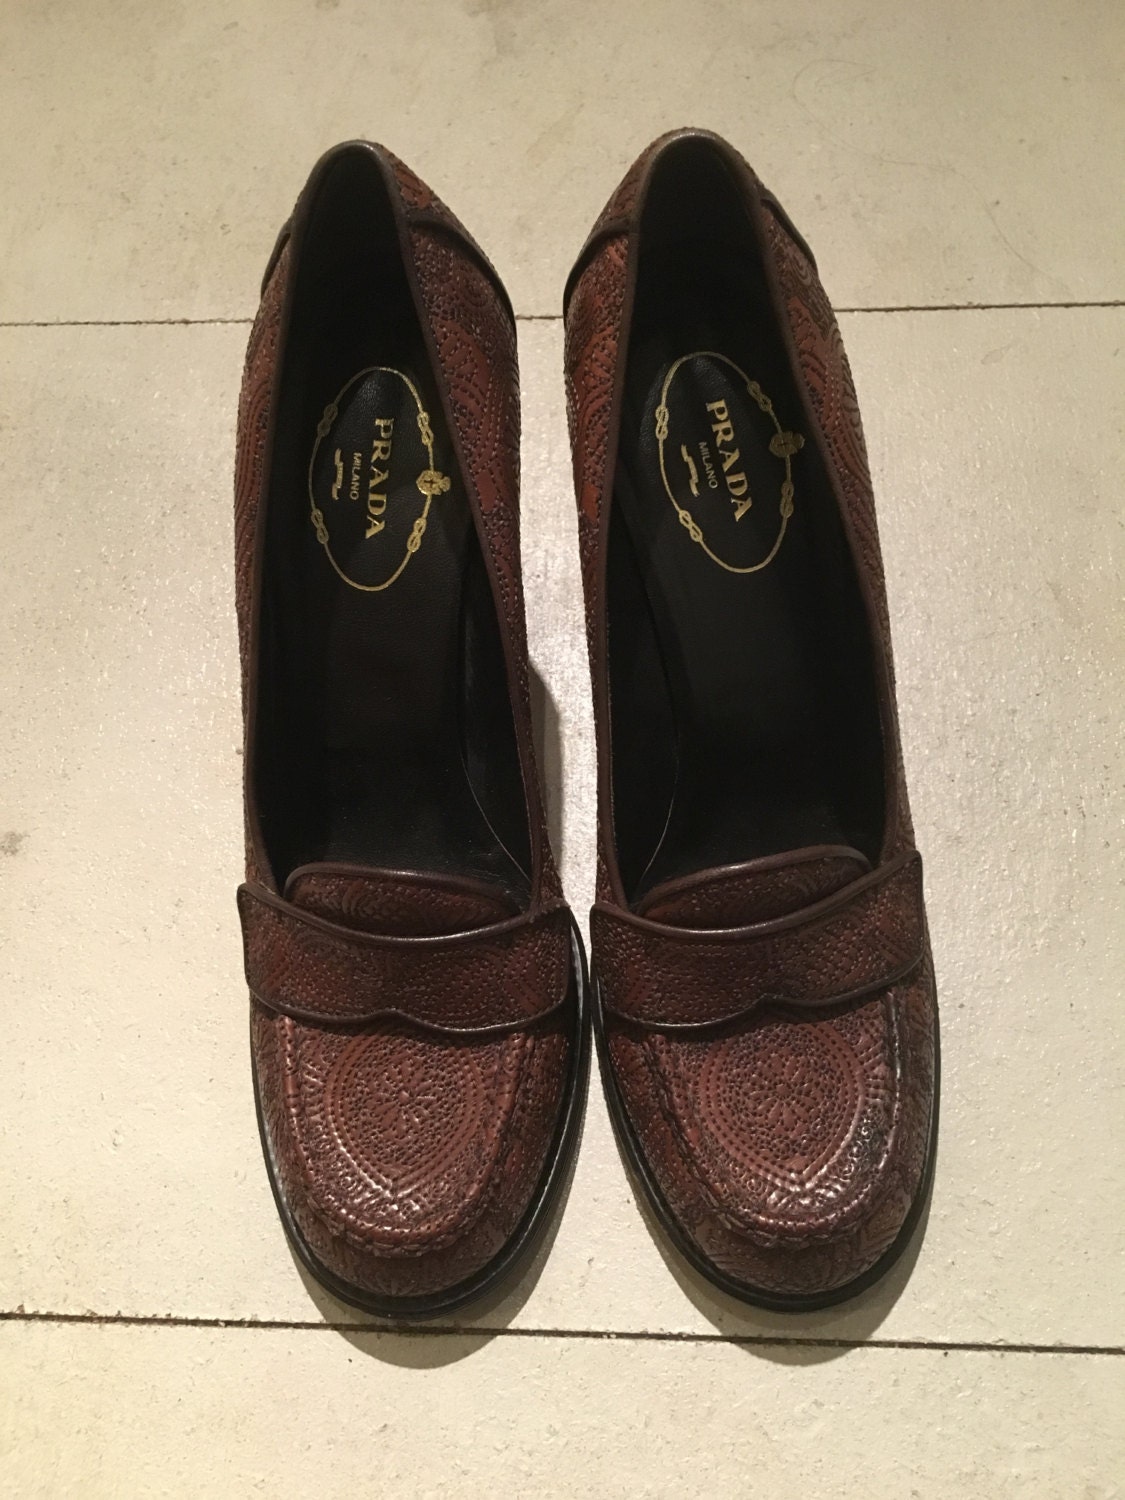 Vintage Prada Court Shoes EU size 40 Vero Cuoio by AimeEncore